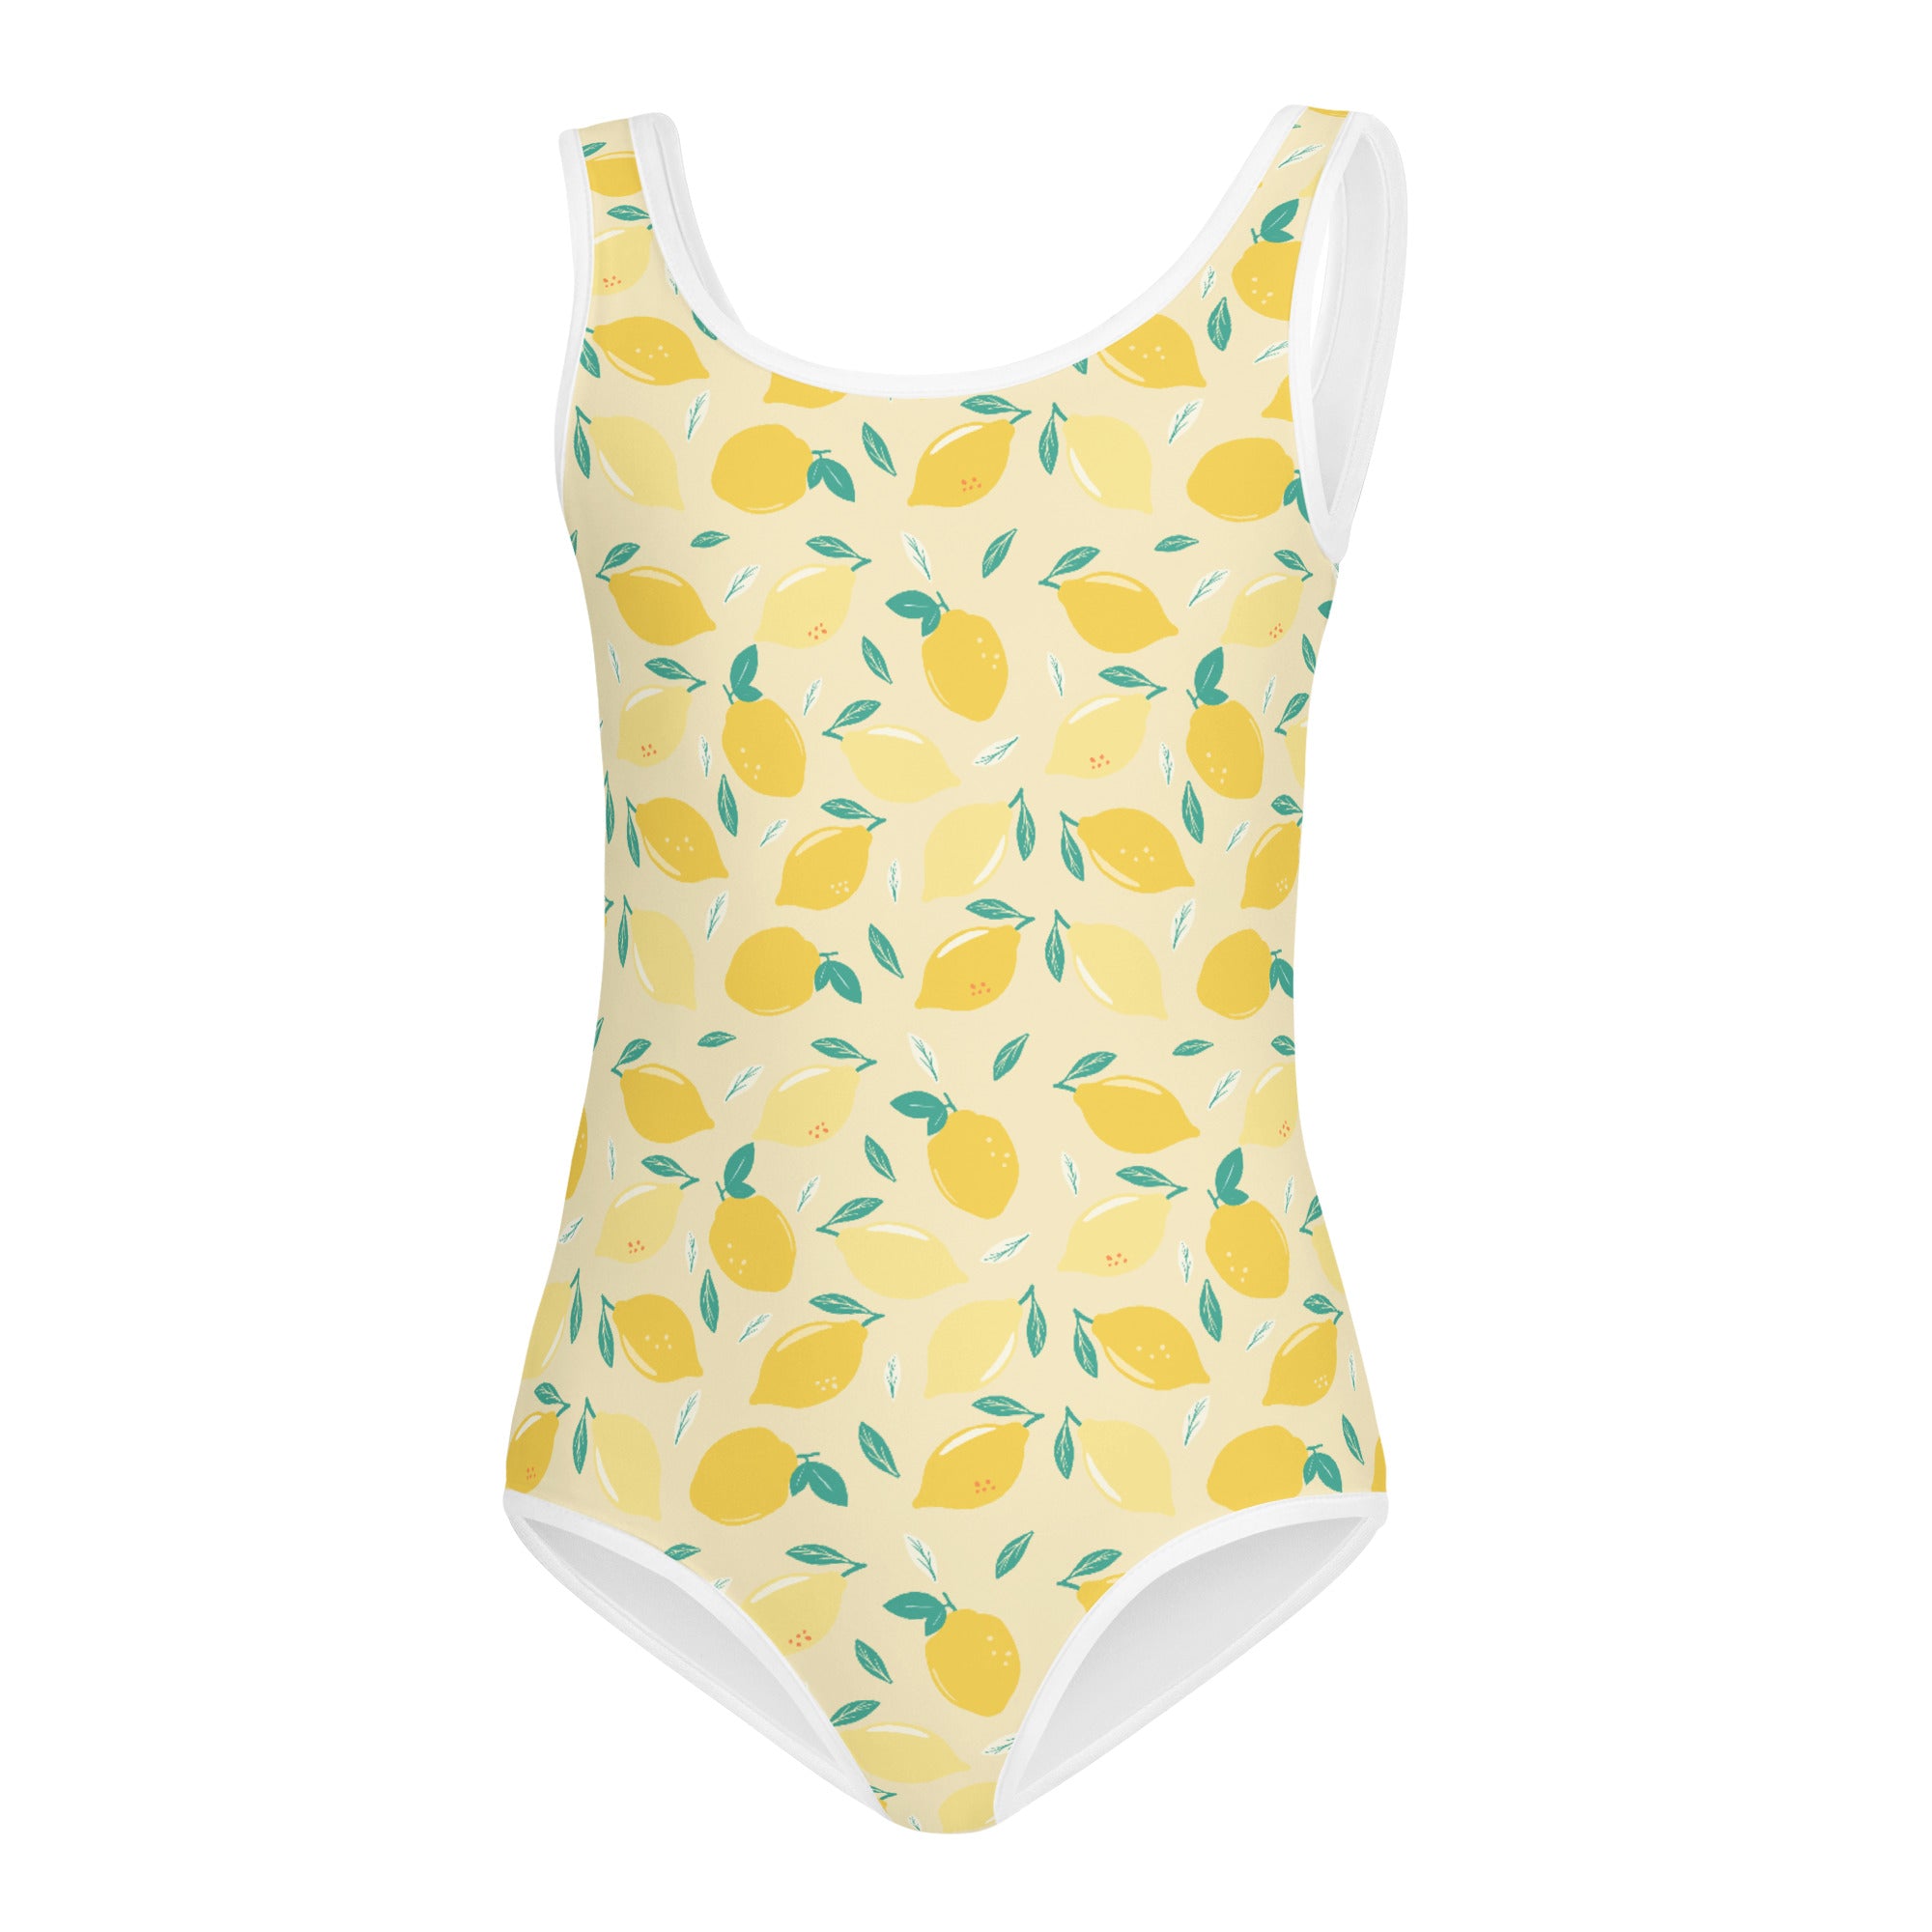 Girls swimsuit with lemons